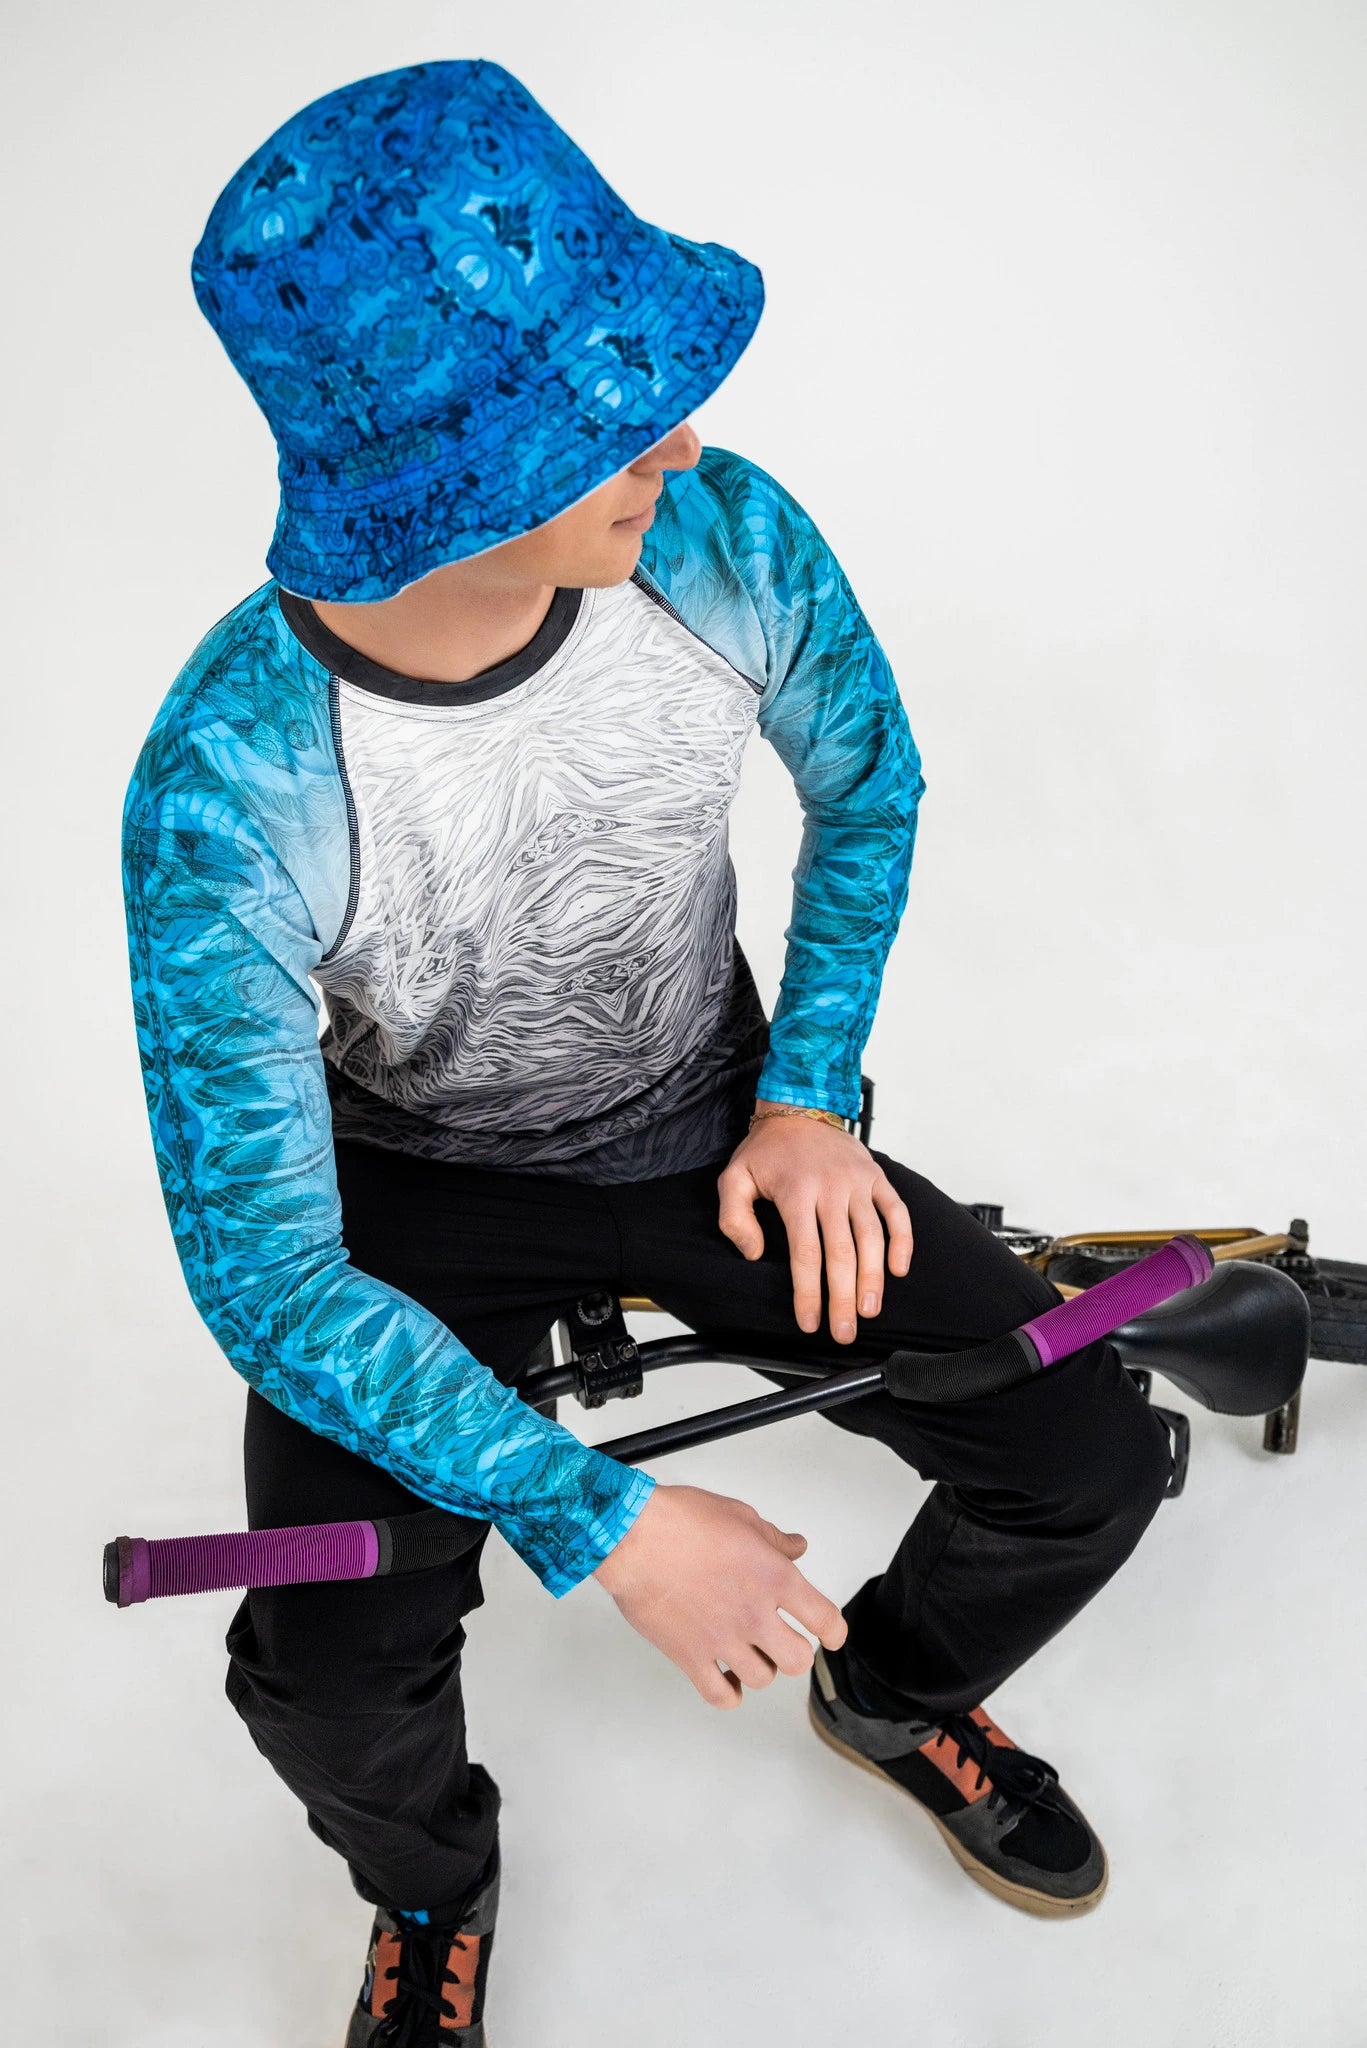 Model sitting on a bike wearing a blue rash guard and bucket hat.